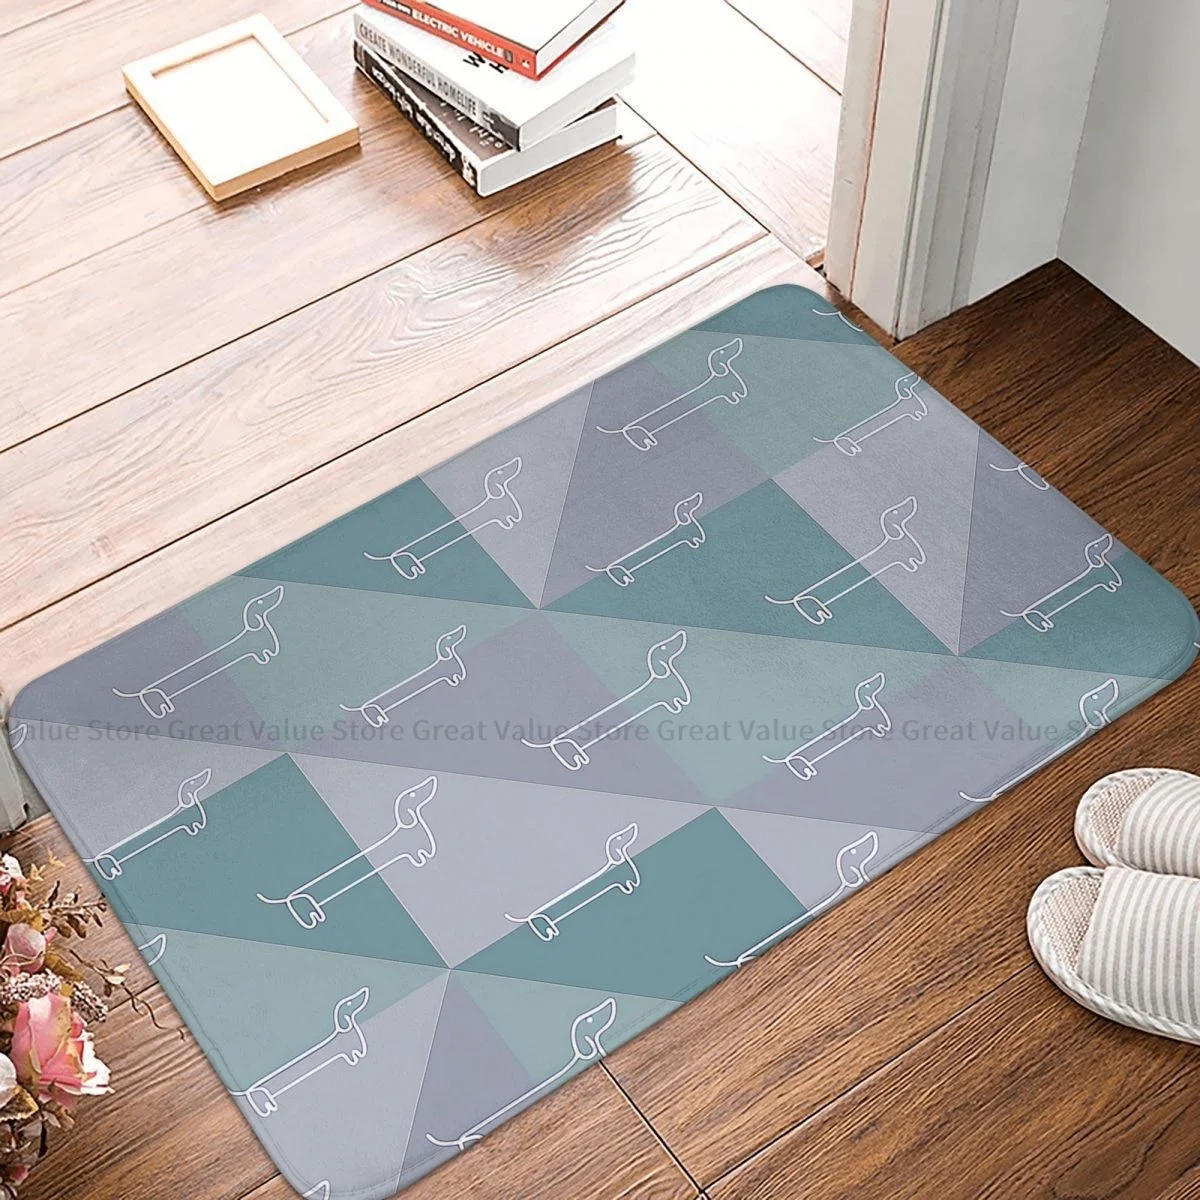 

Dachshund Pet Dog Non-slip Doormat Kitchen Mat DRA 2020 Pattern Floor Carpet Entrance Door Rug Bedroom Decorative